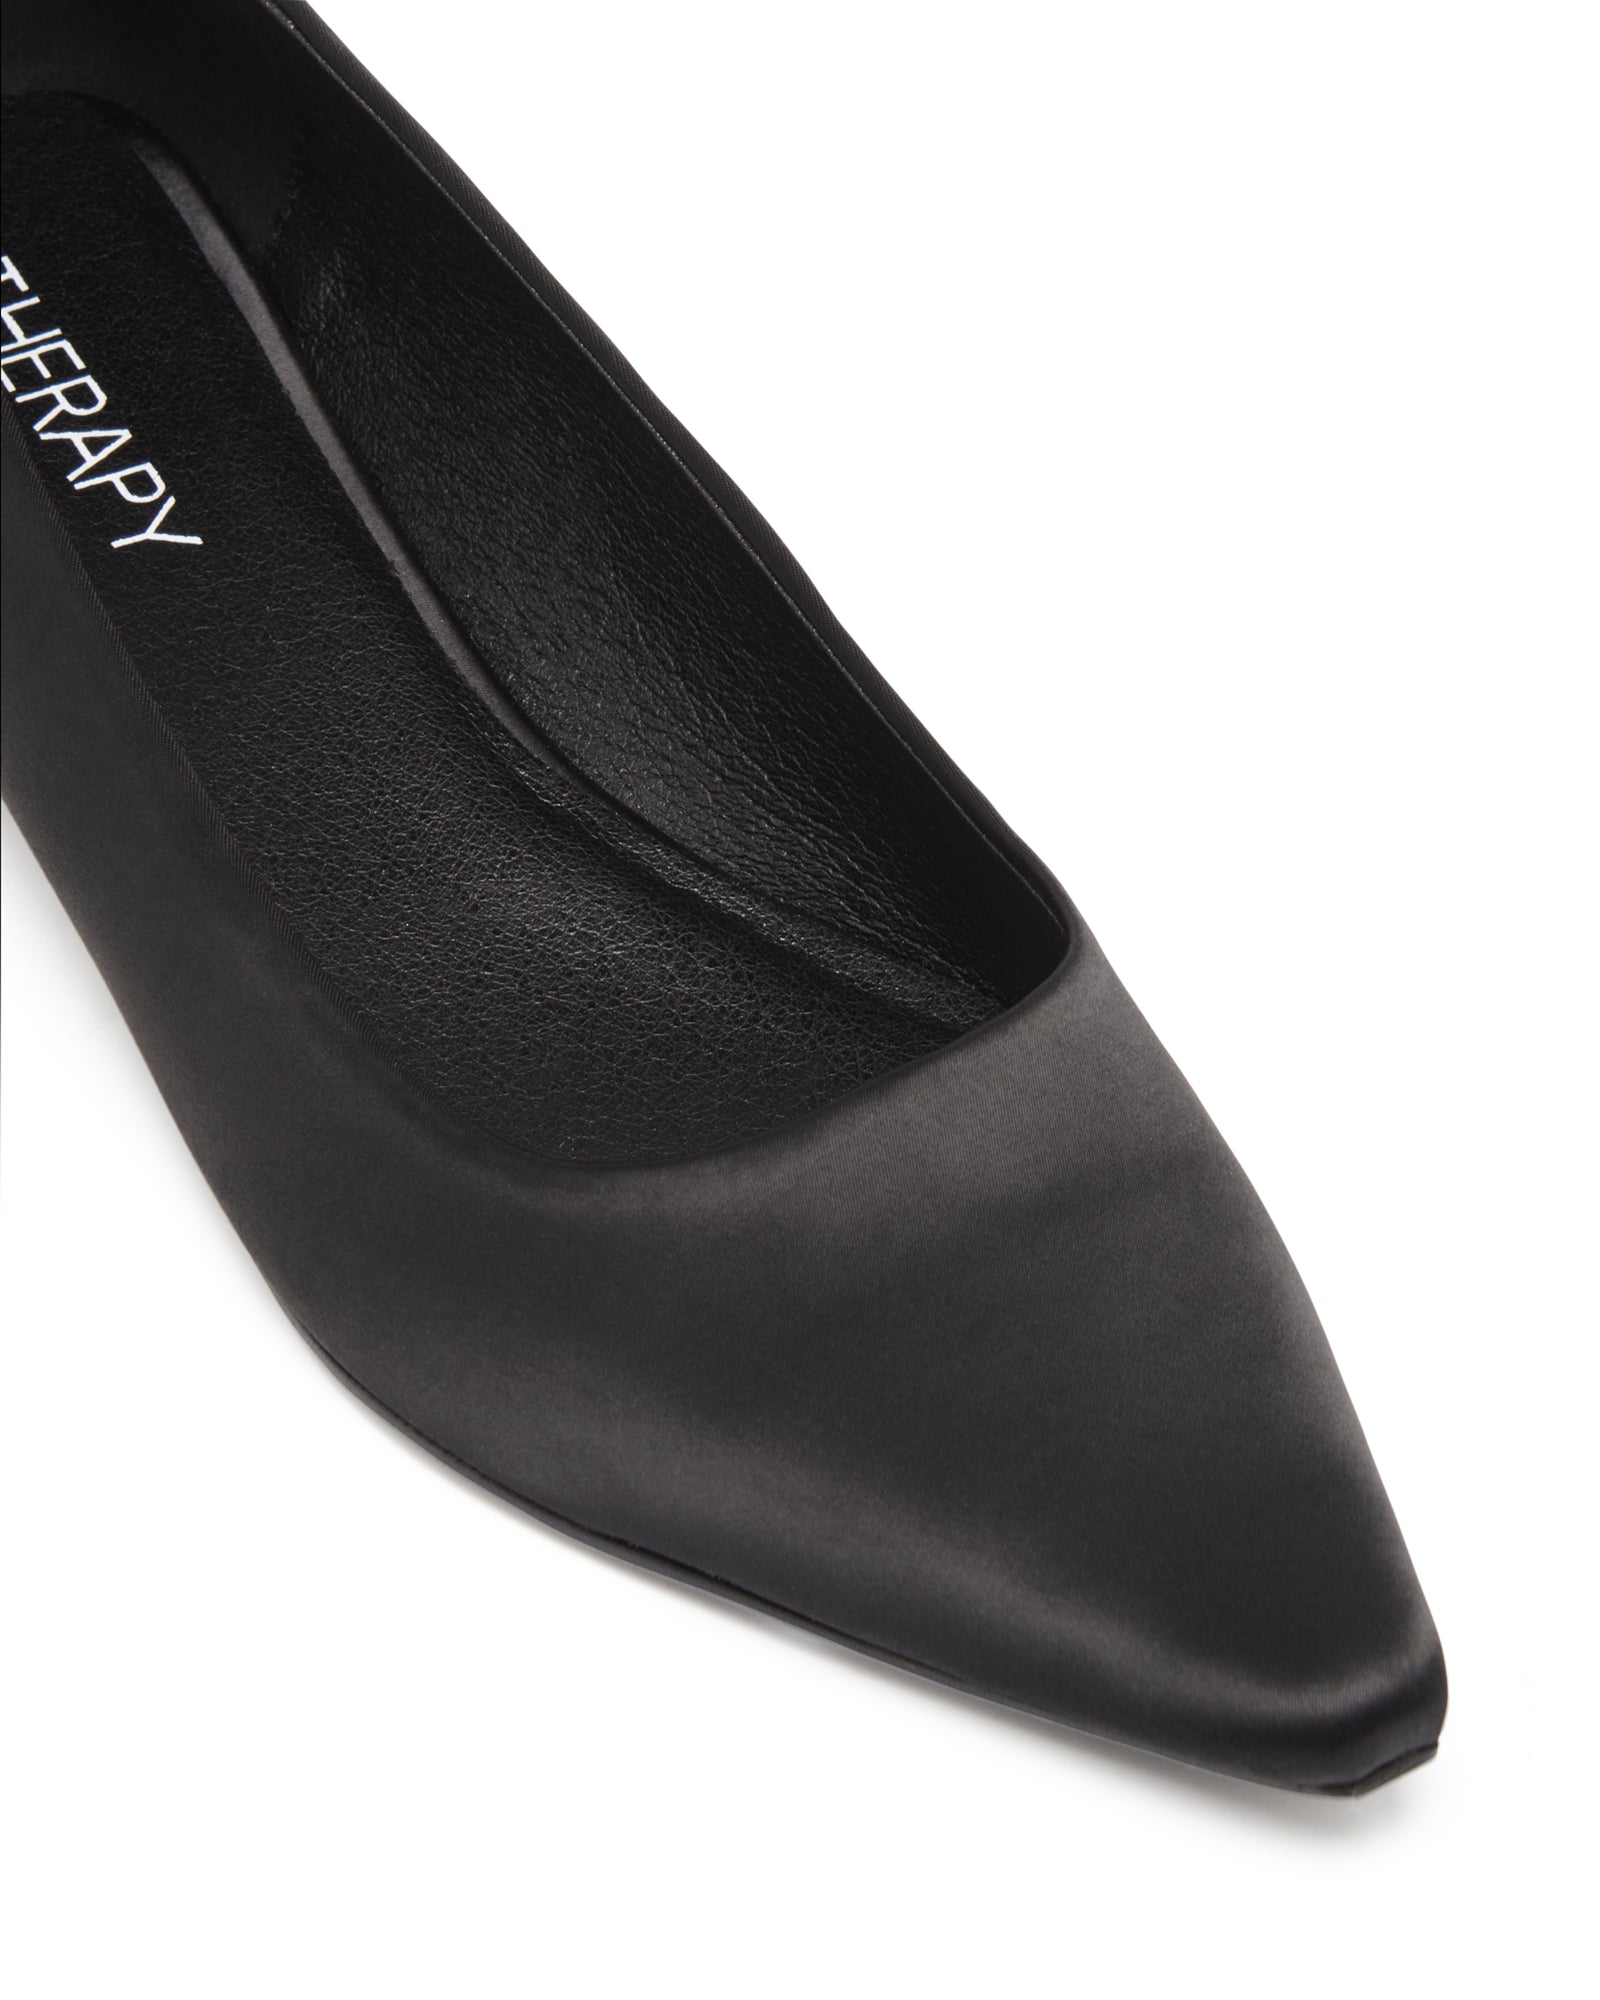 Therapy Shoes Mirage Black Satin | Women's Heel | Low | Ballet | Flat